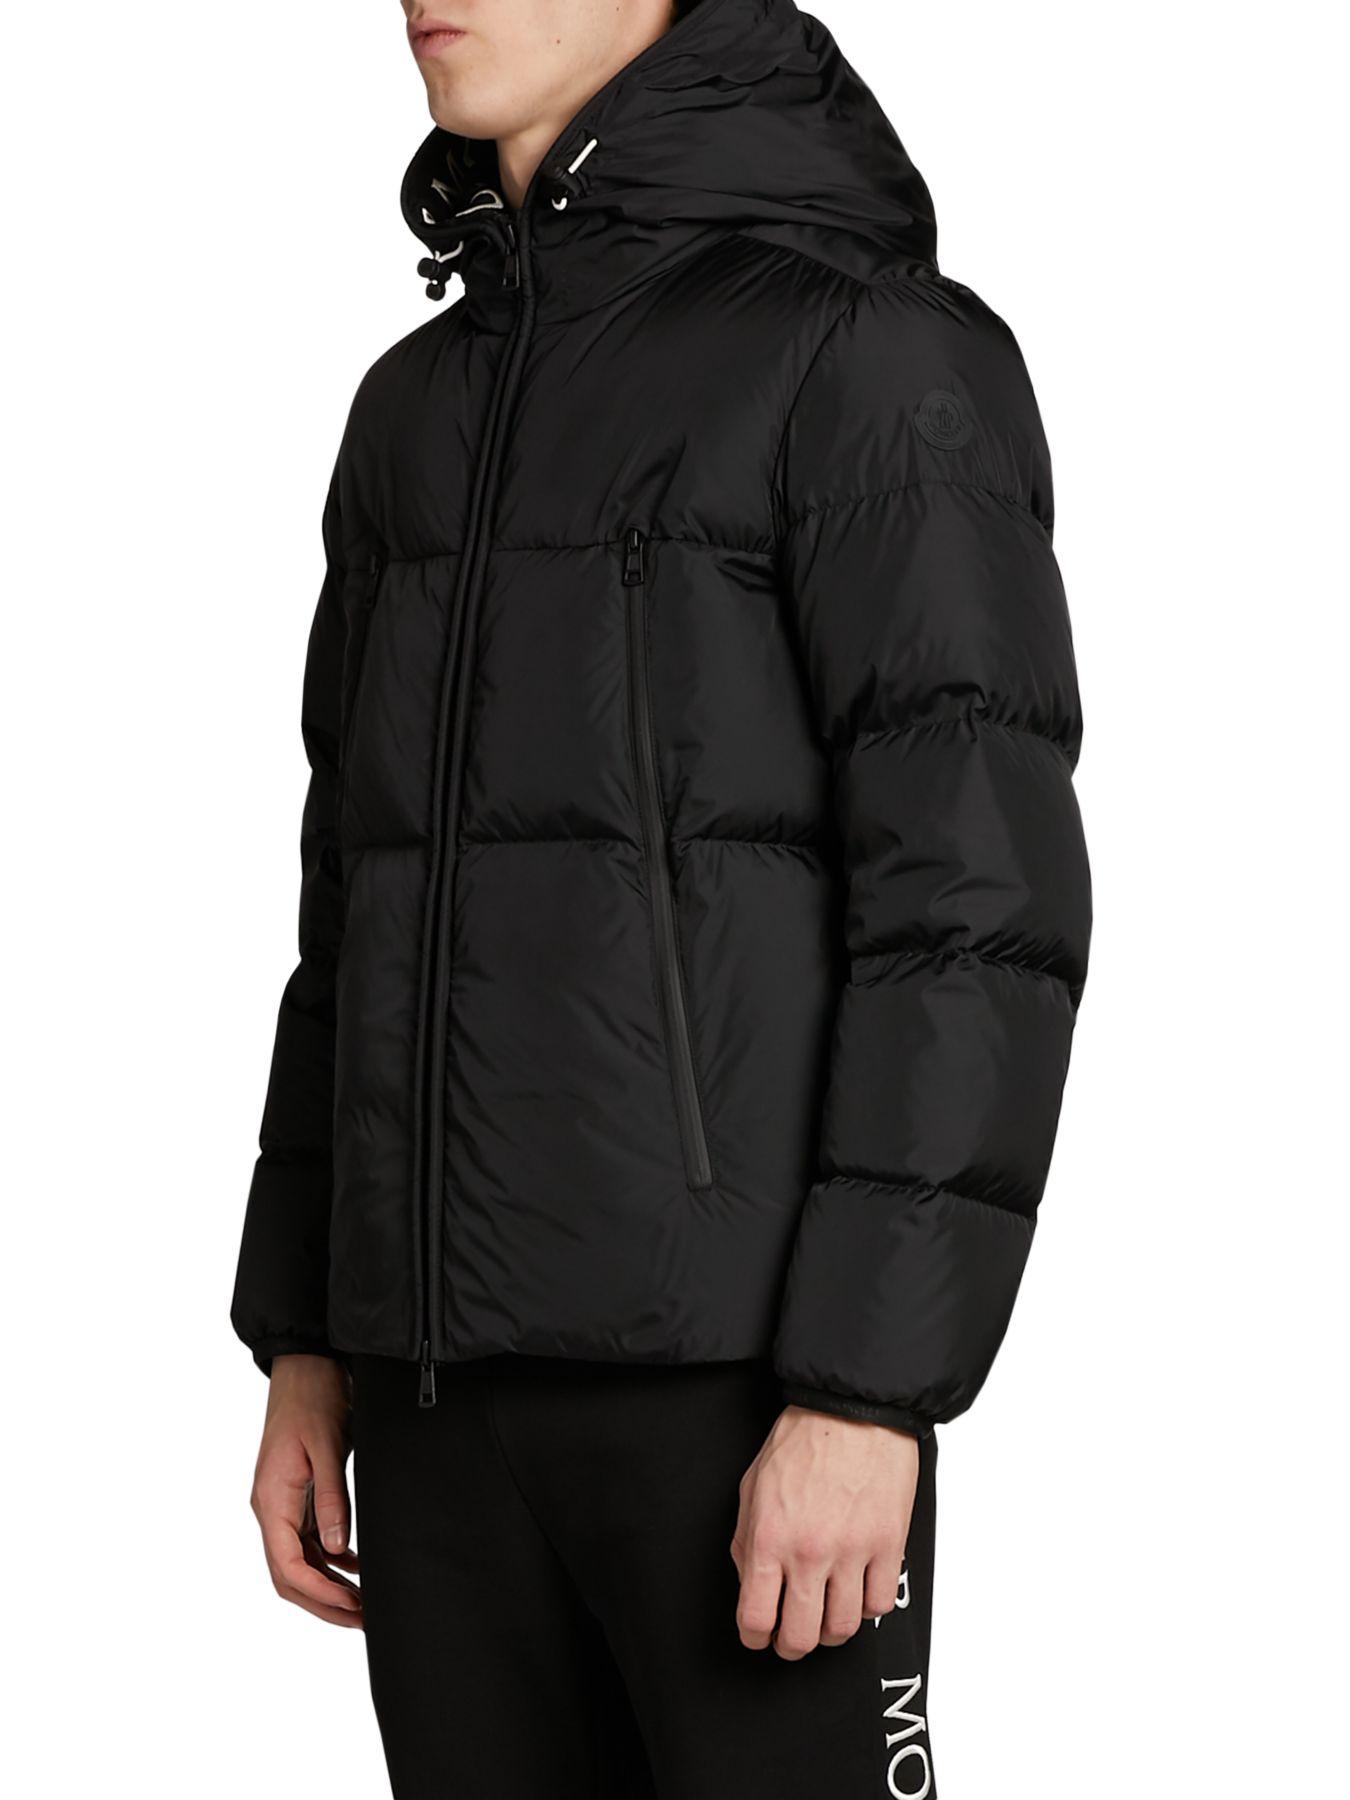 Moncler Synthetic Logo Puffer Jacket in Black for Men - Lyst